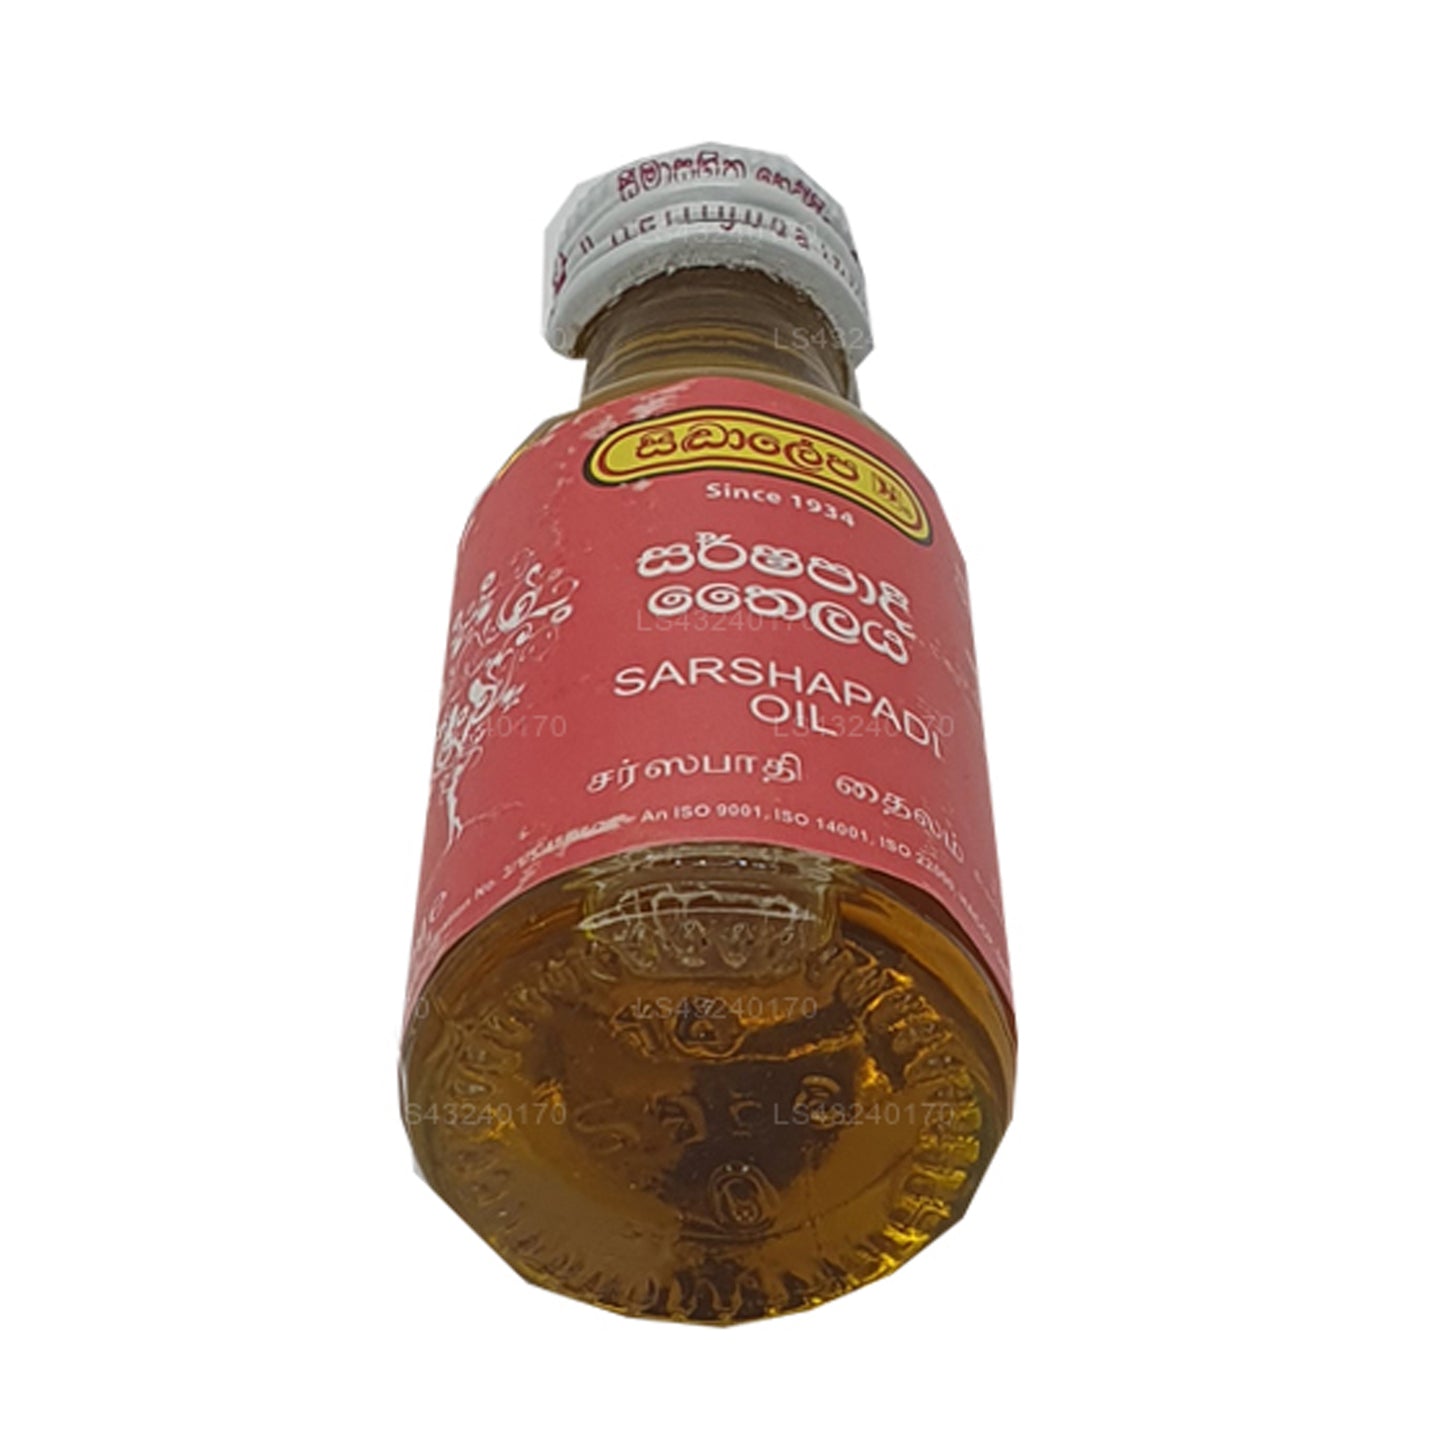 Aceite de Siddhalepa Sarshapadi (30 ml)